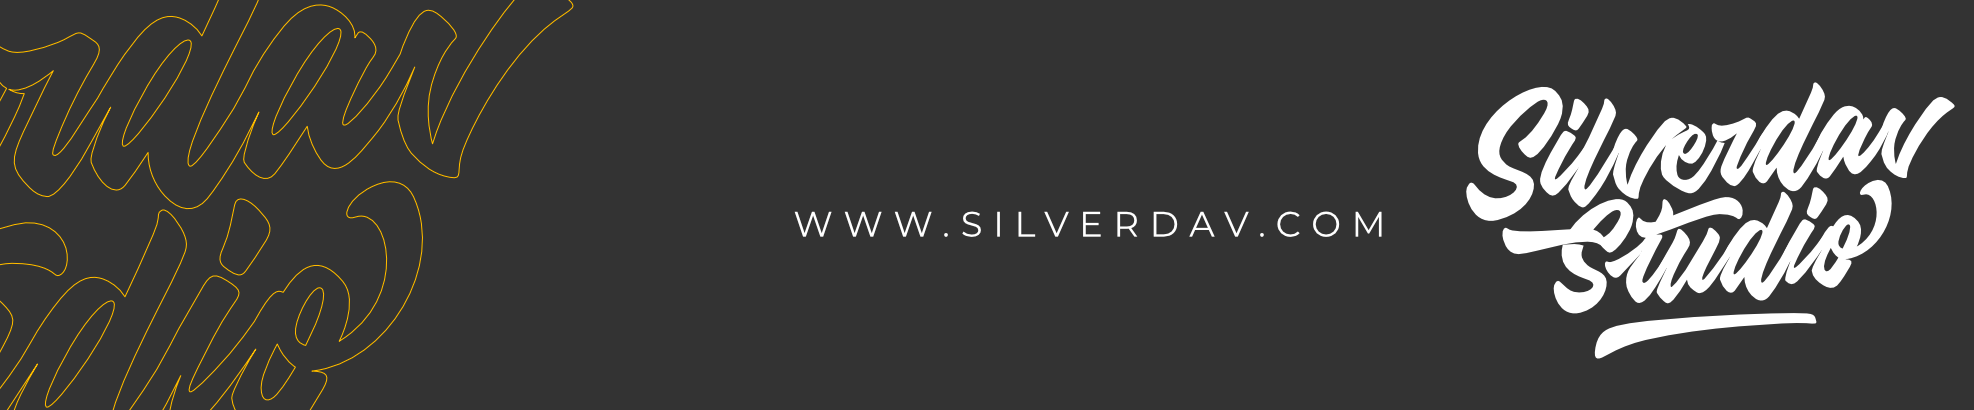 Silverdav Studio's profile banner